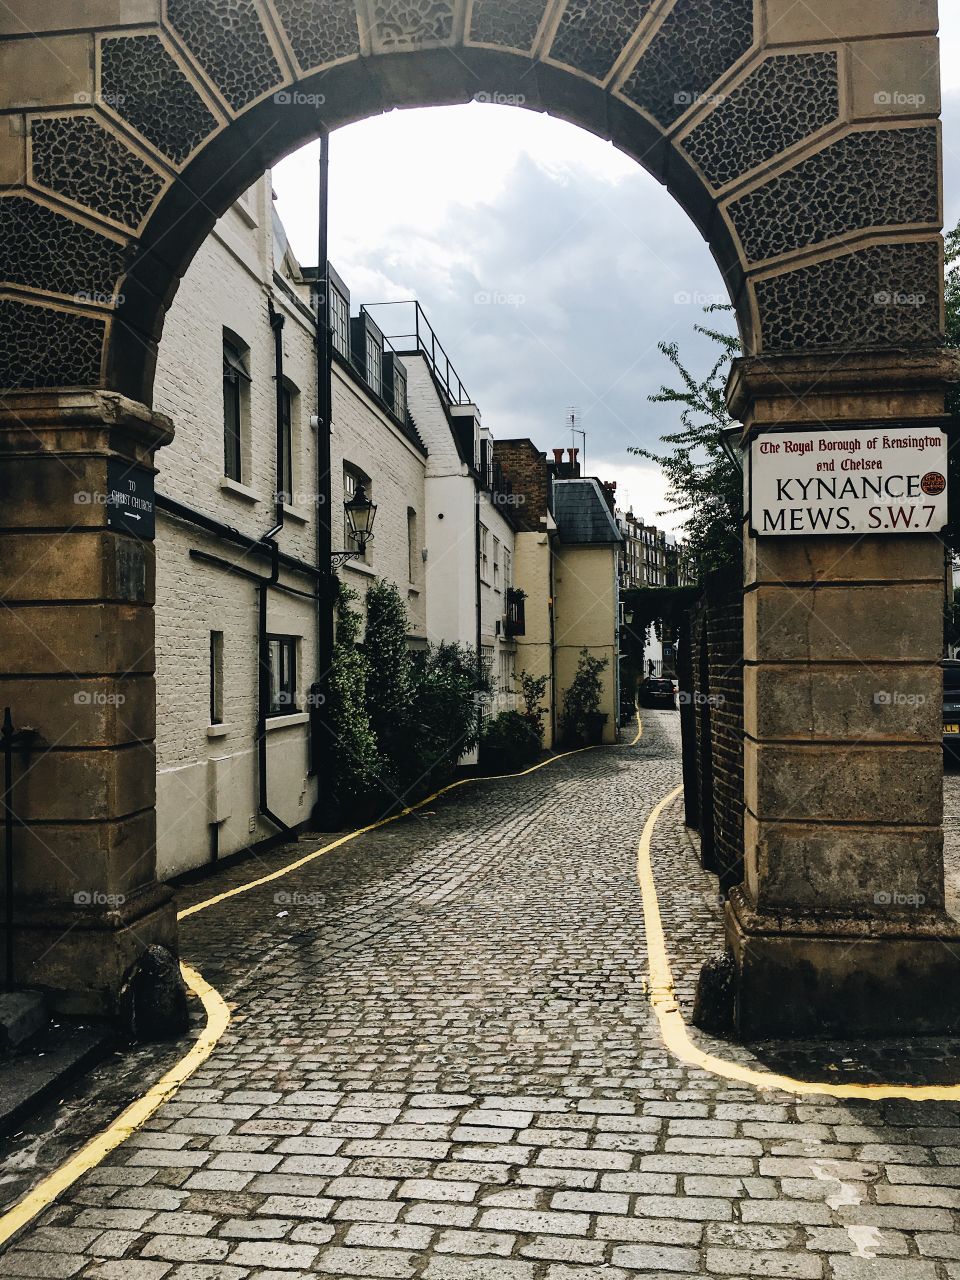 A Mews Street in London. Cobblestone through an archway. 